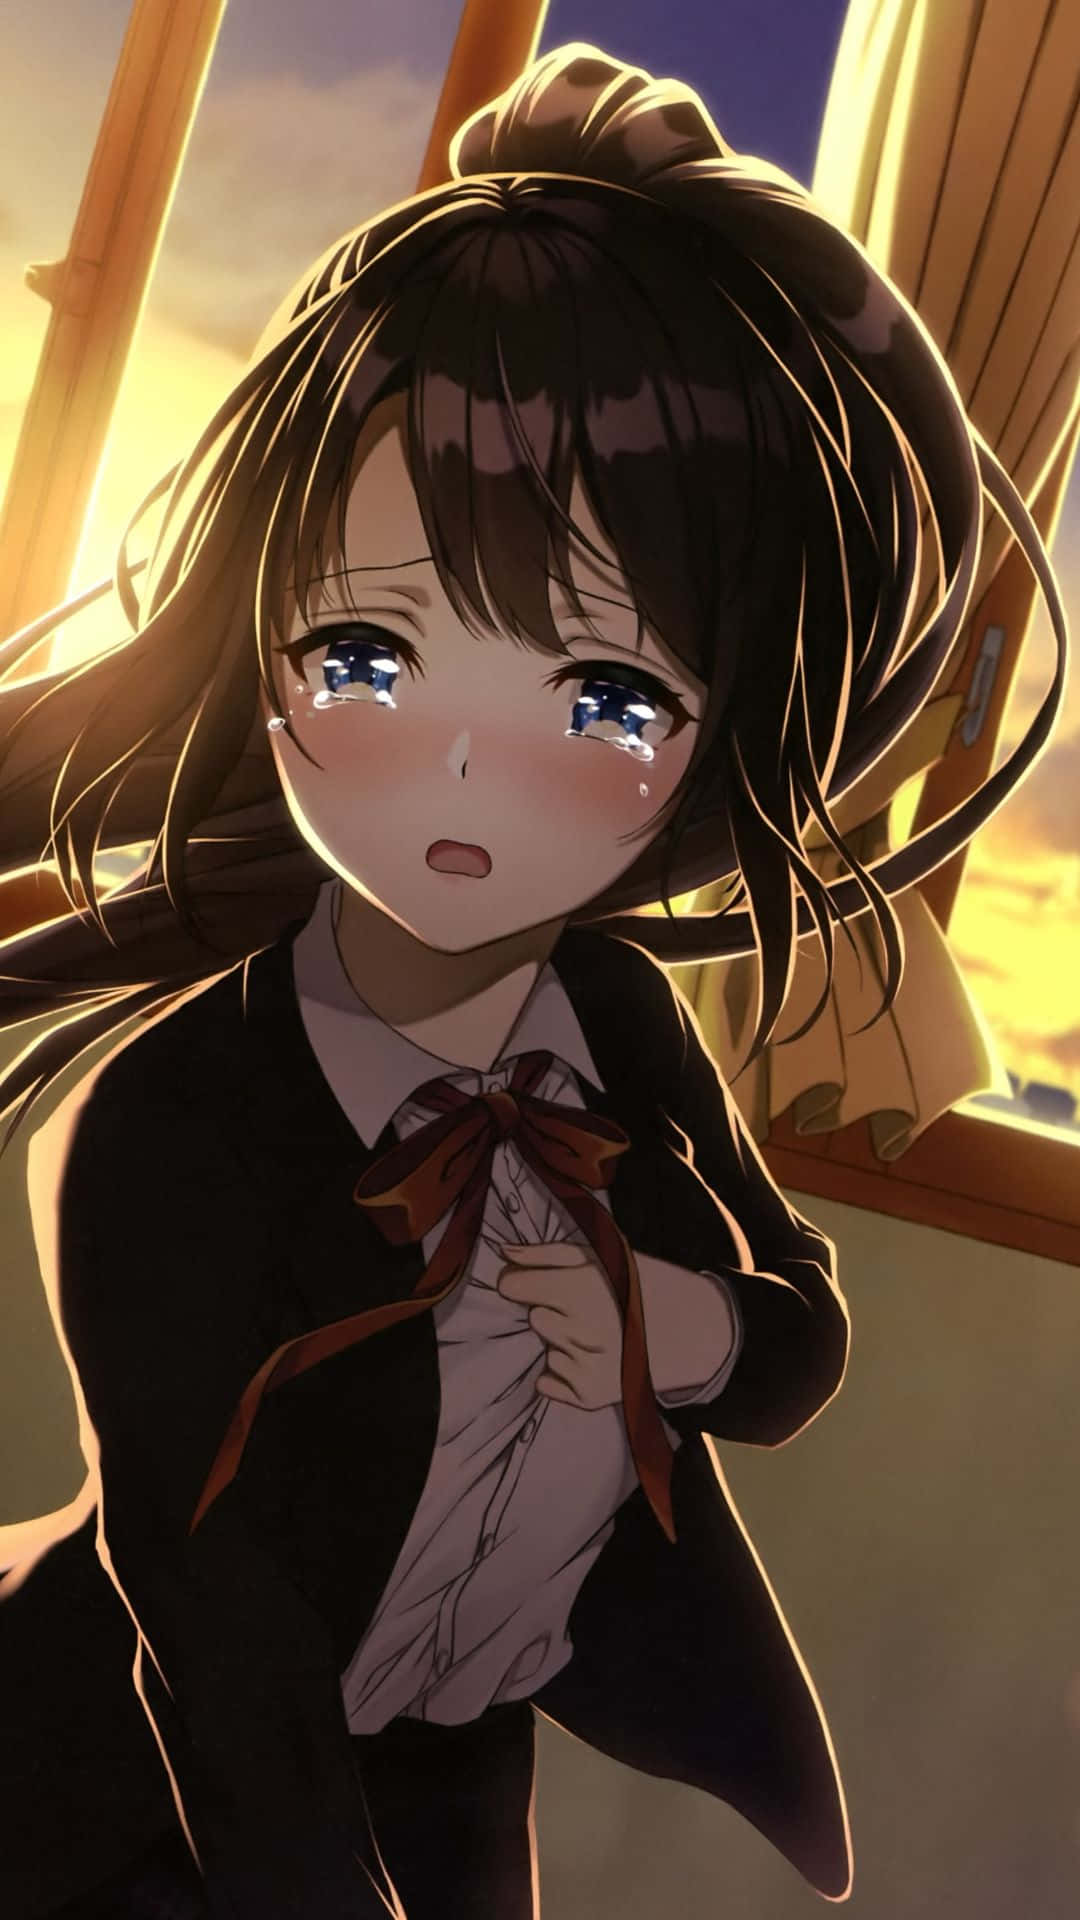 Sad Crying Anime Girl Running Away Wallpaper